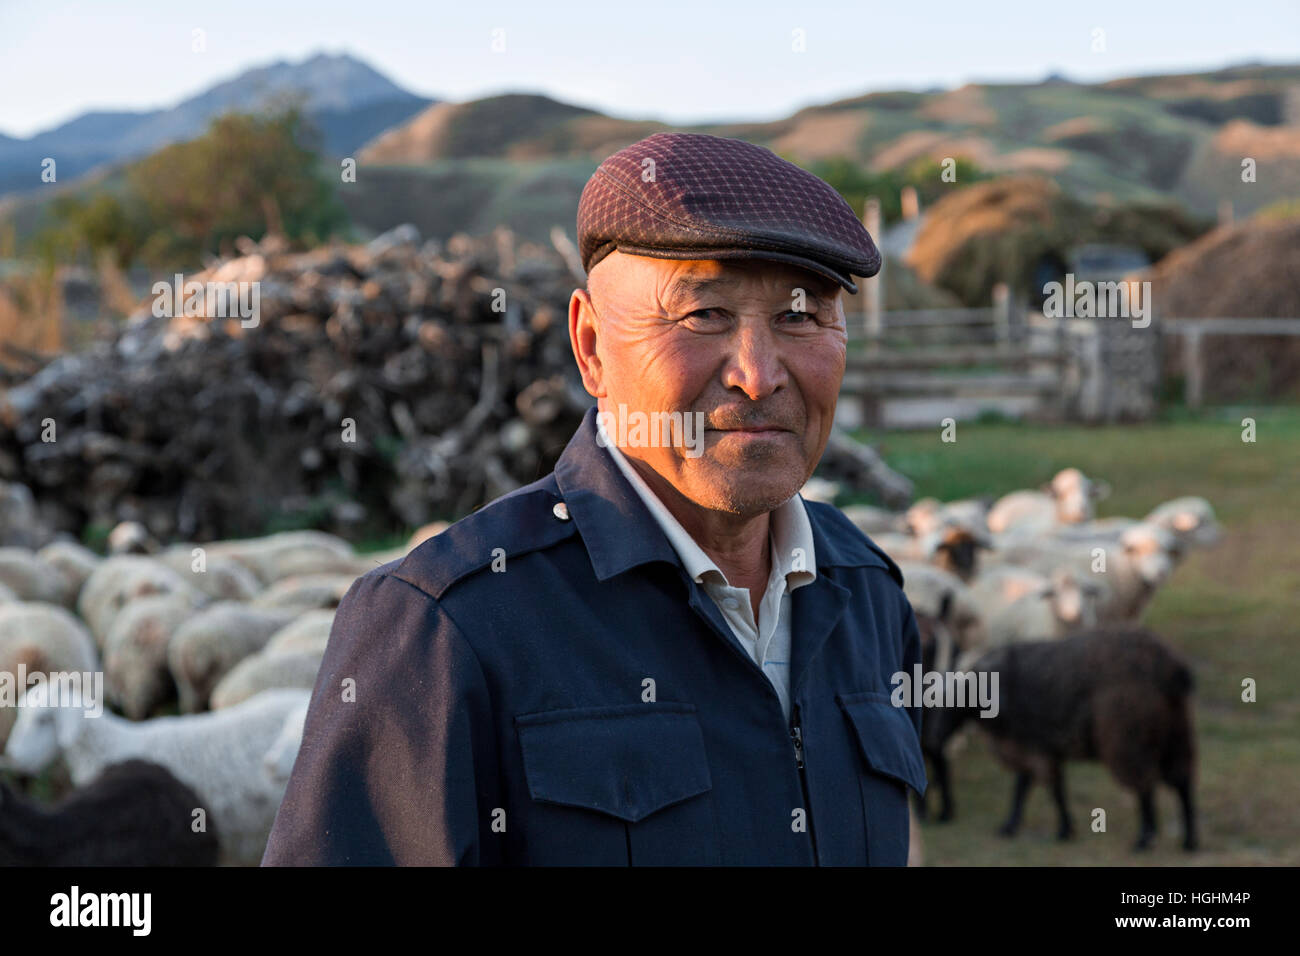 Kazakh man with his herd of sheep in Saty Village, Kazakhstan. Stock Photo